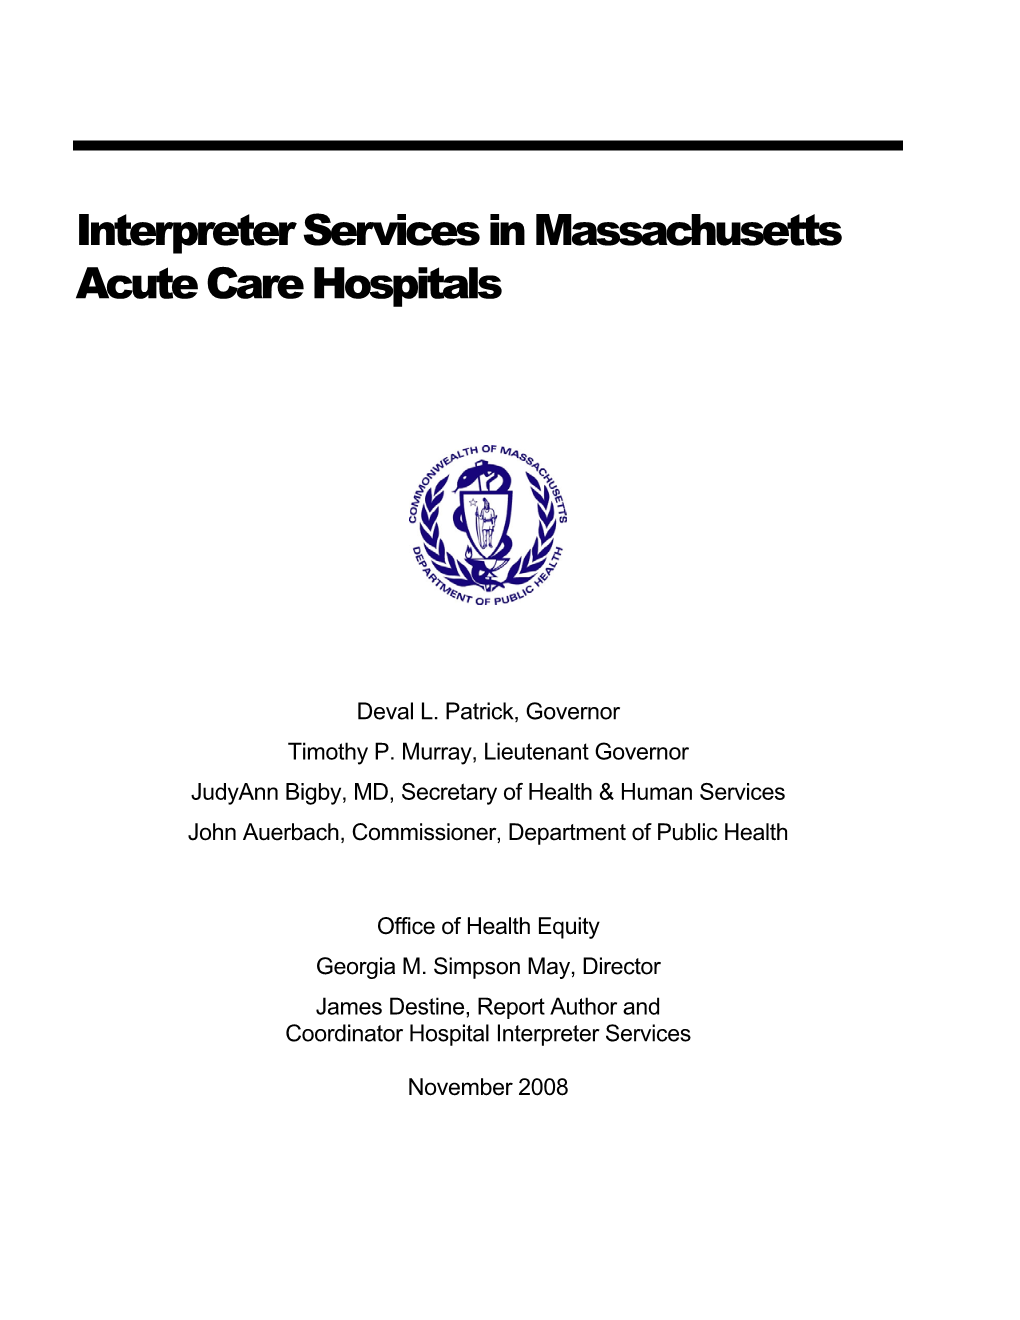 Interpreter Services in Massachusetts Acute Care Hospitals